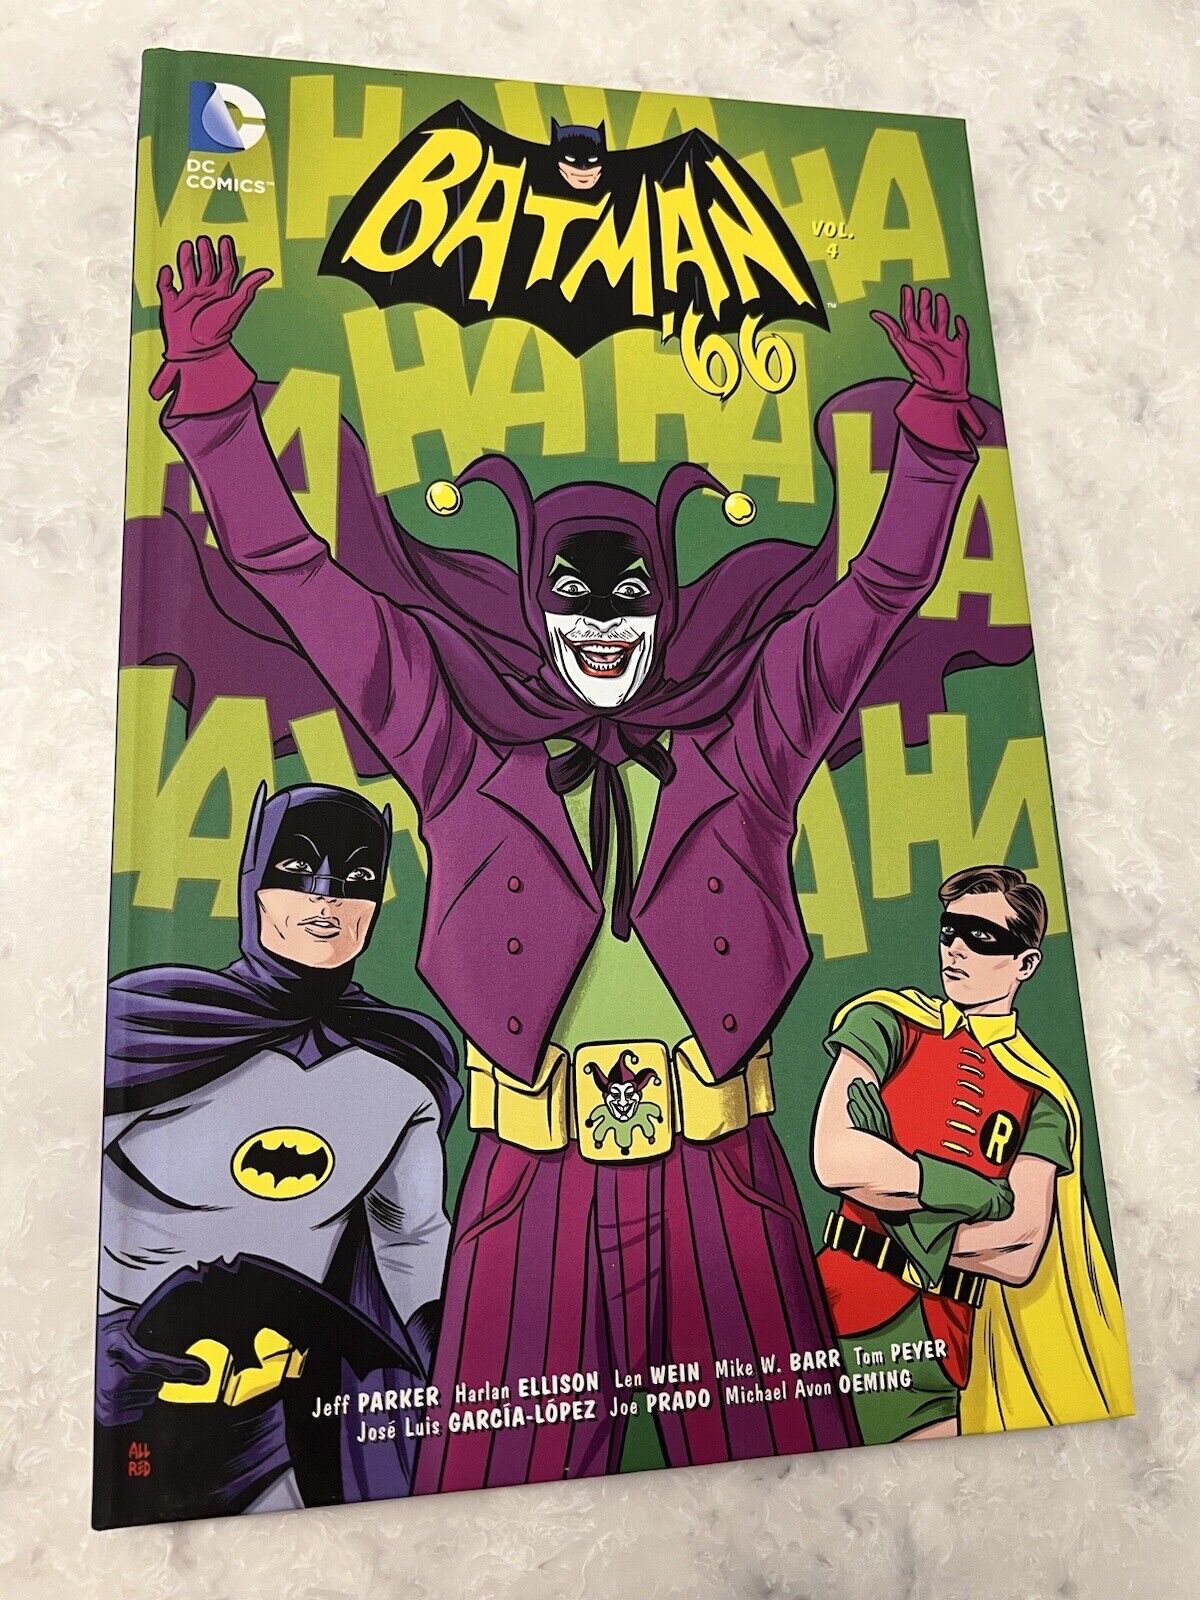 Autographed Signed Batman 66 Volume 4 Comic Jose Luis Garcia Lopez Hardcover